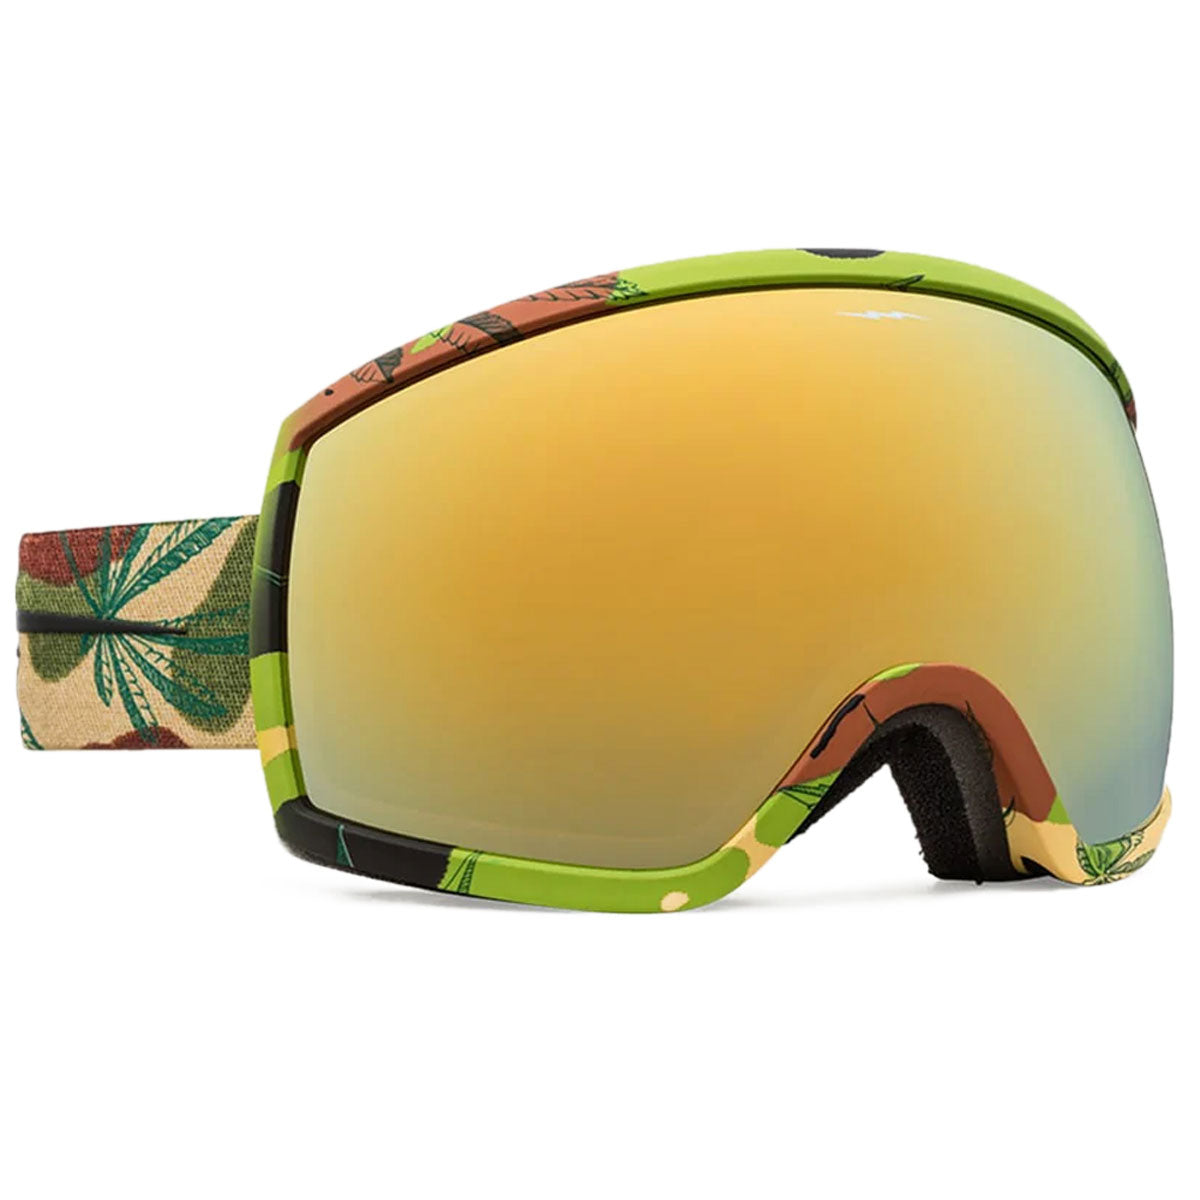 Electric EG2-T Snowboard Goggles - Matte Camobis/Auburn Gold image 1